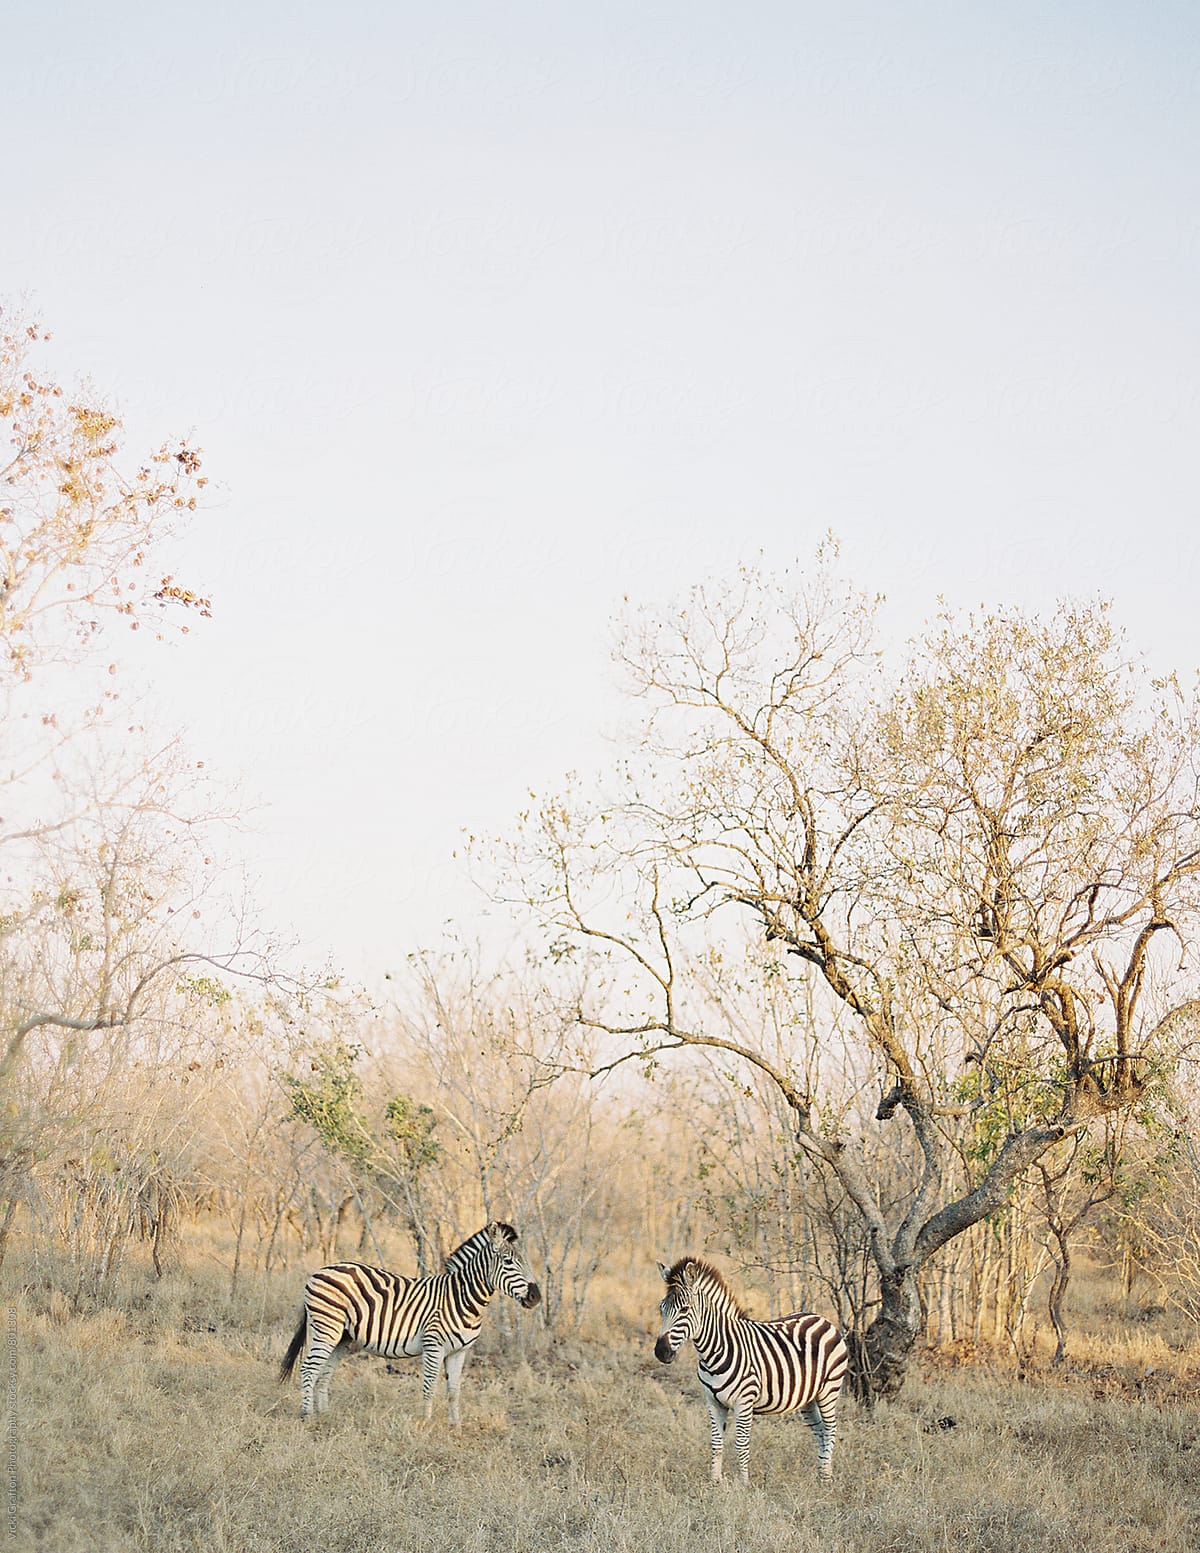 Zebra on Safari in South Africa